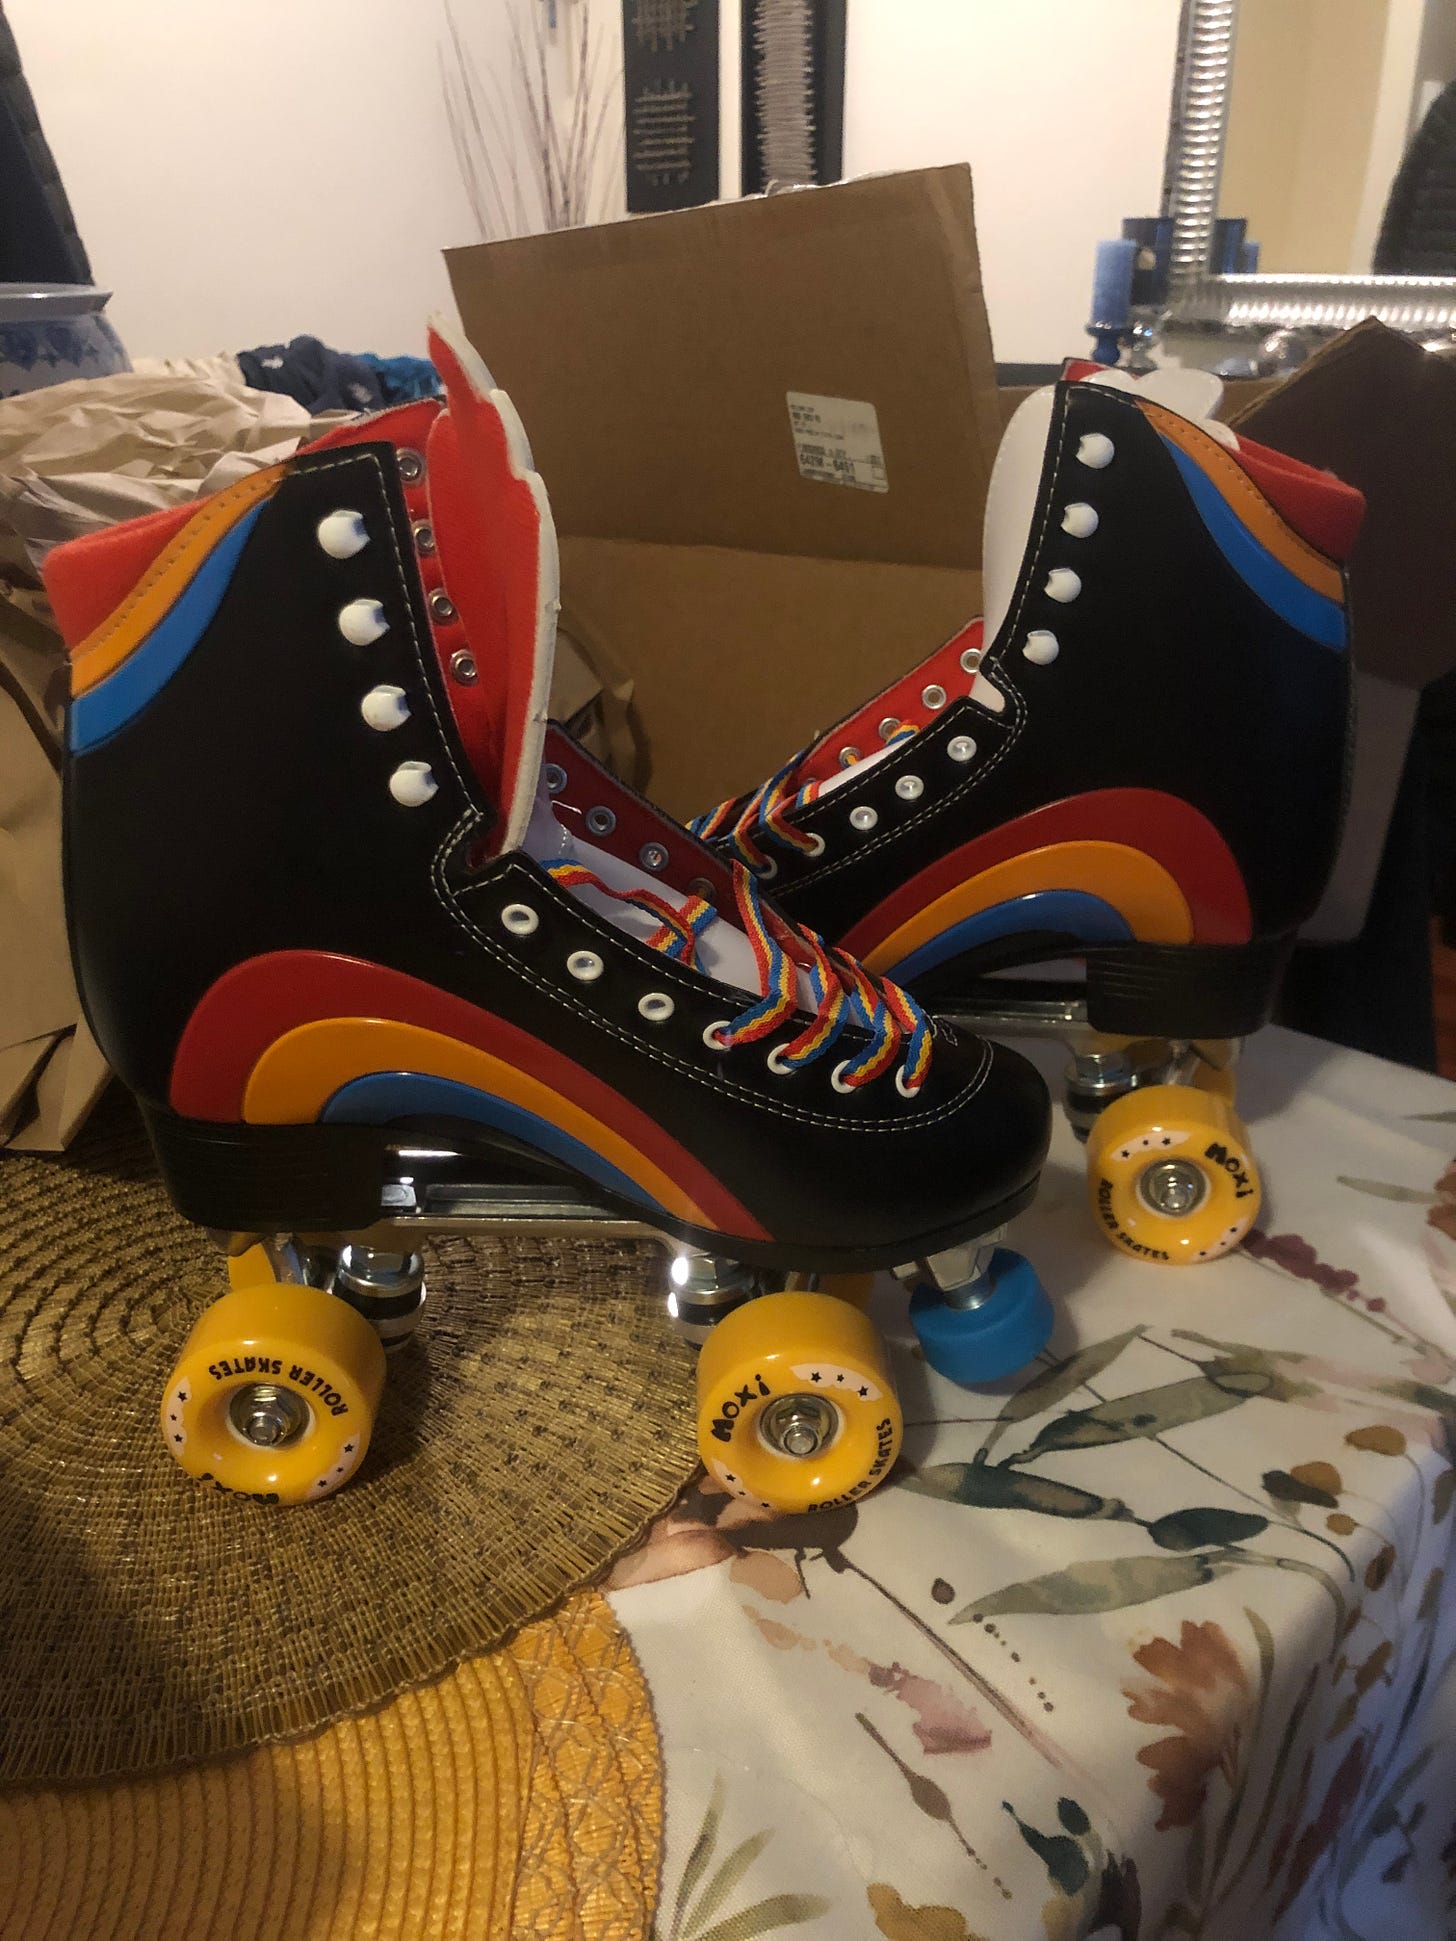 A pair of rainbow and black skates on a table.